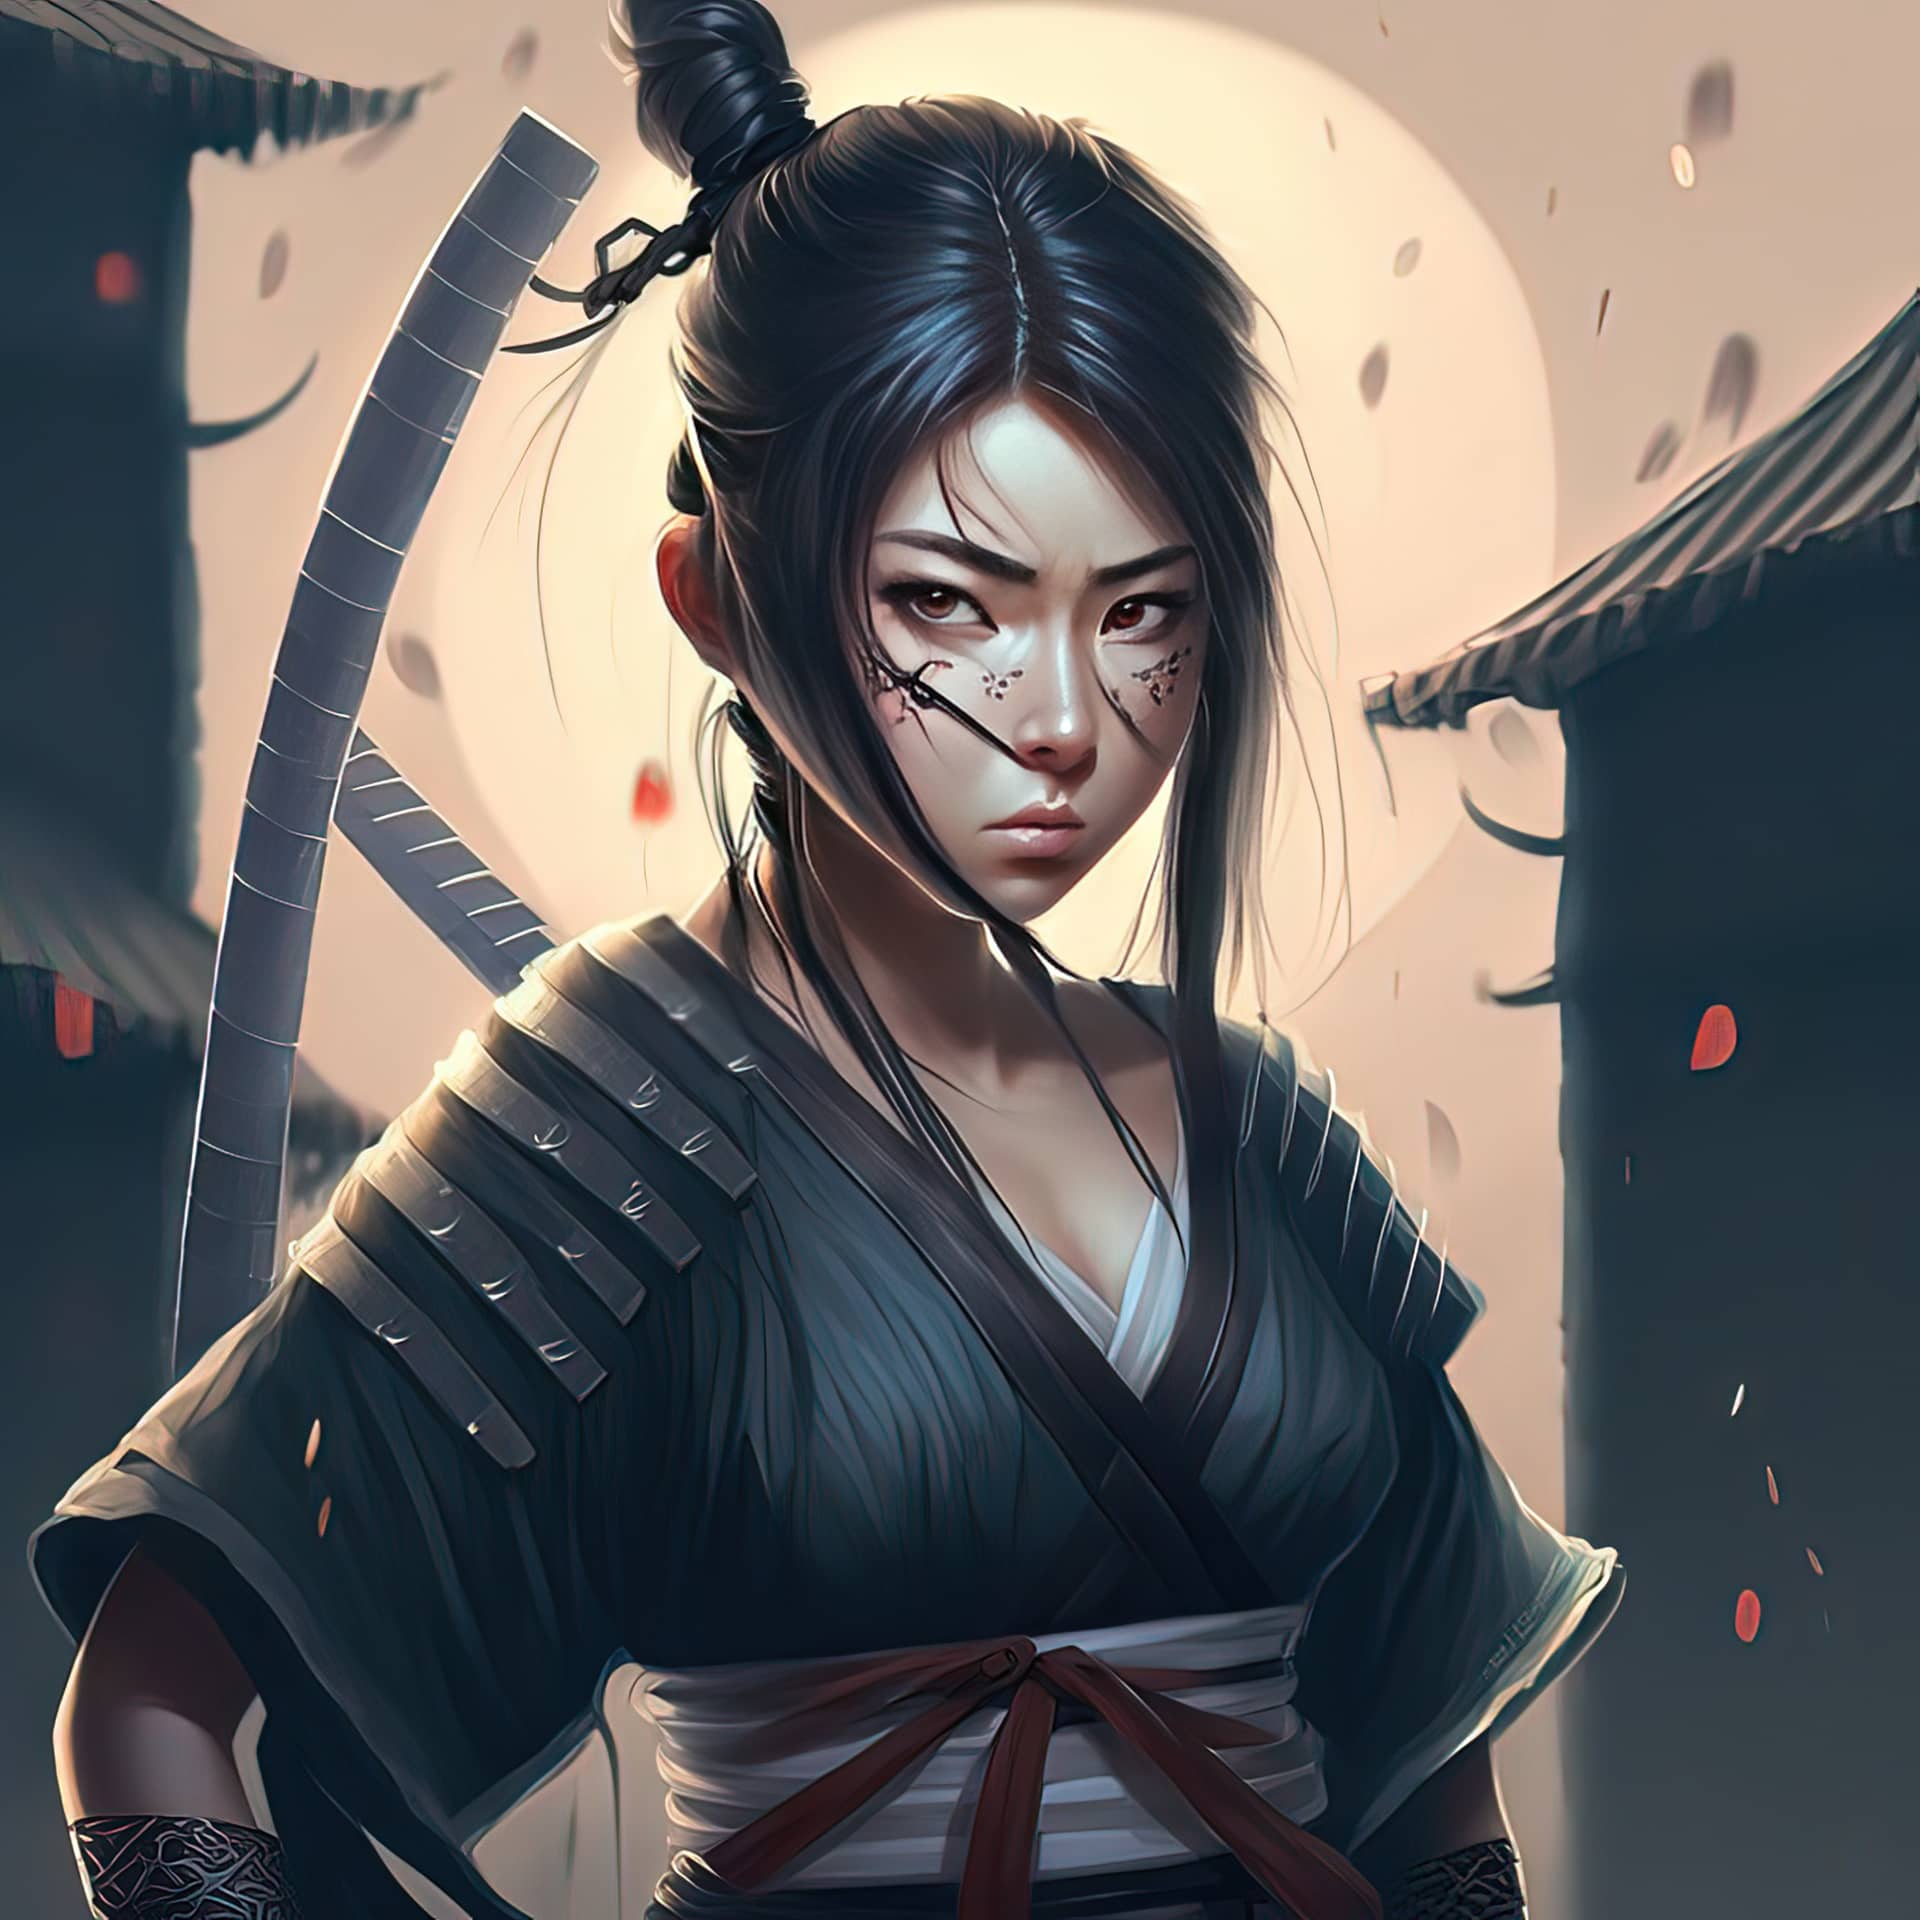 Beautiful japanese ninja girl concept art digital painting fantasy illustration